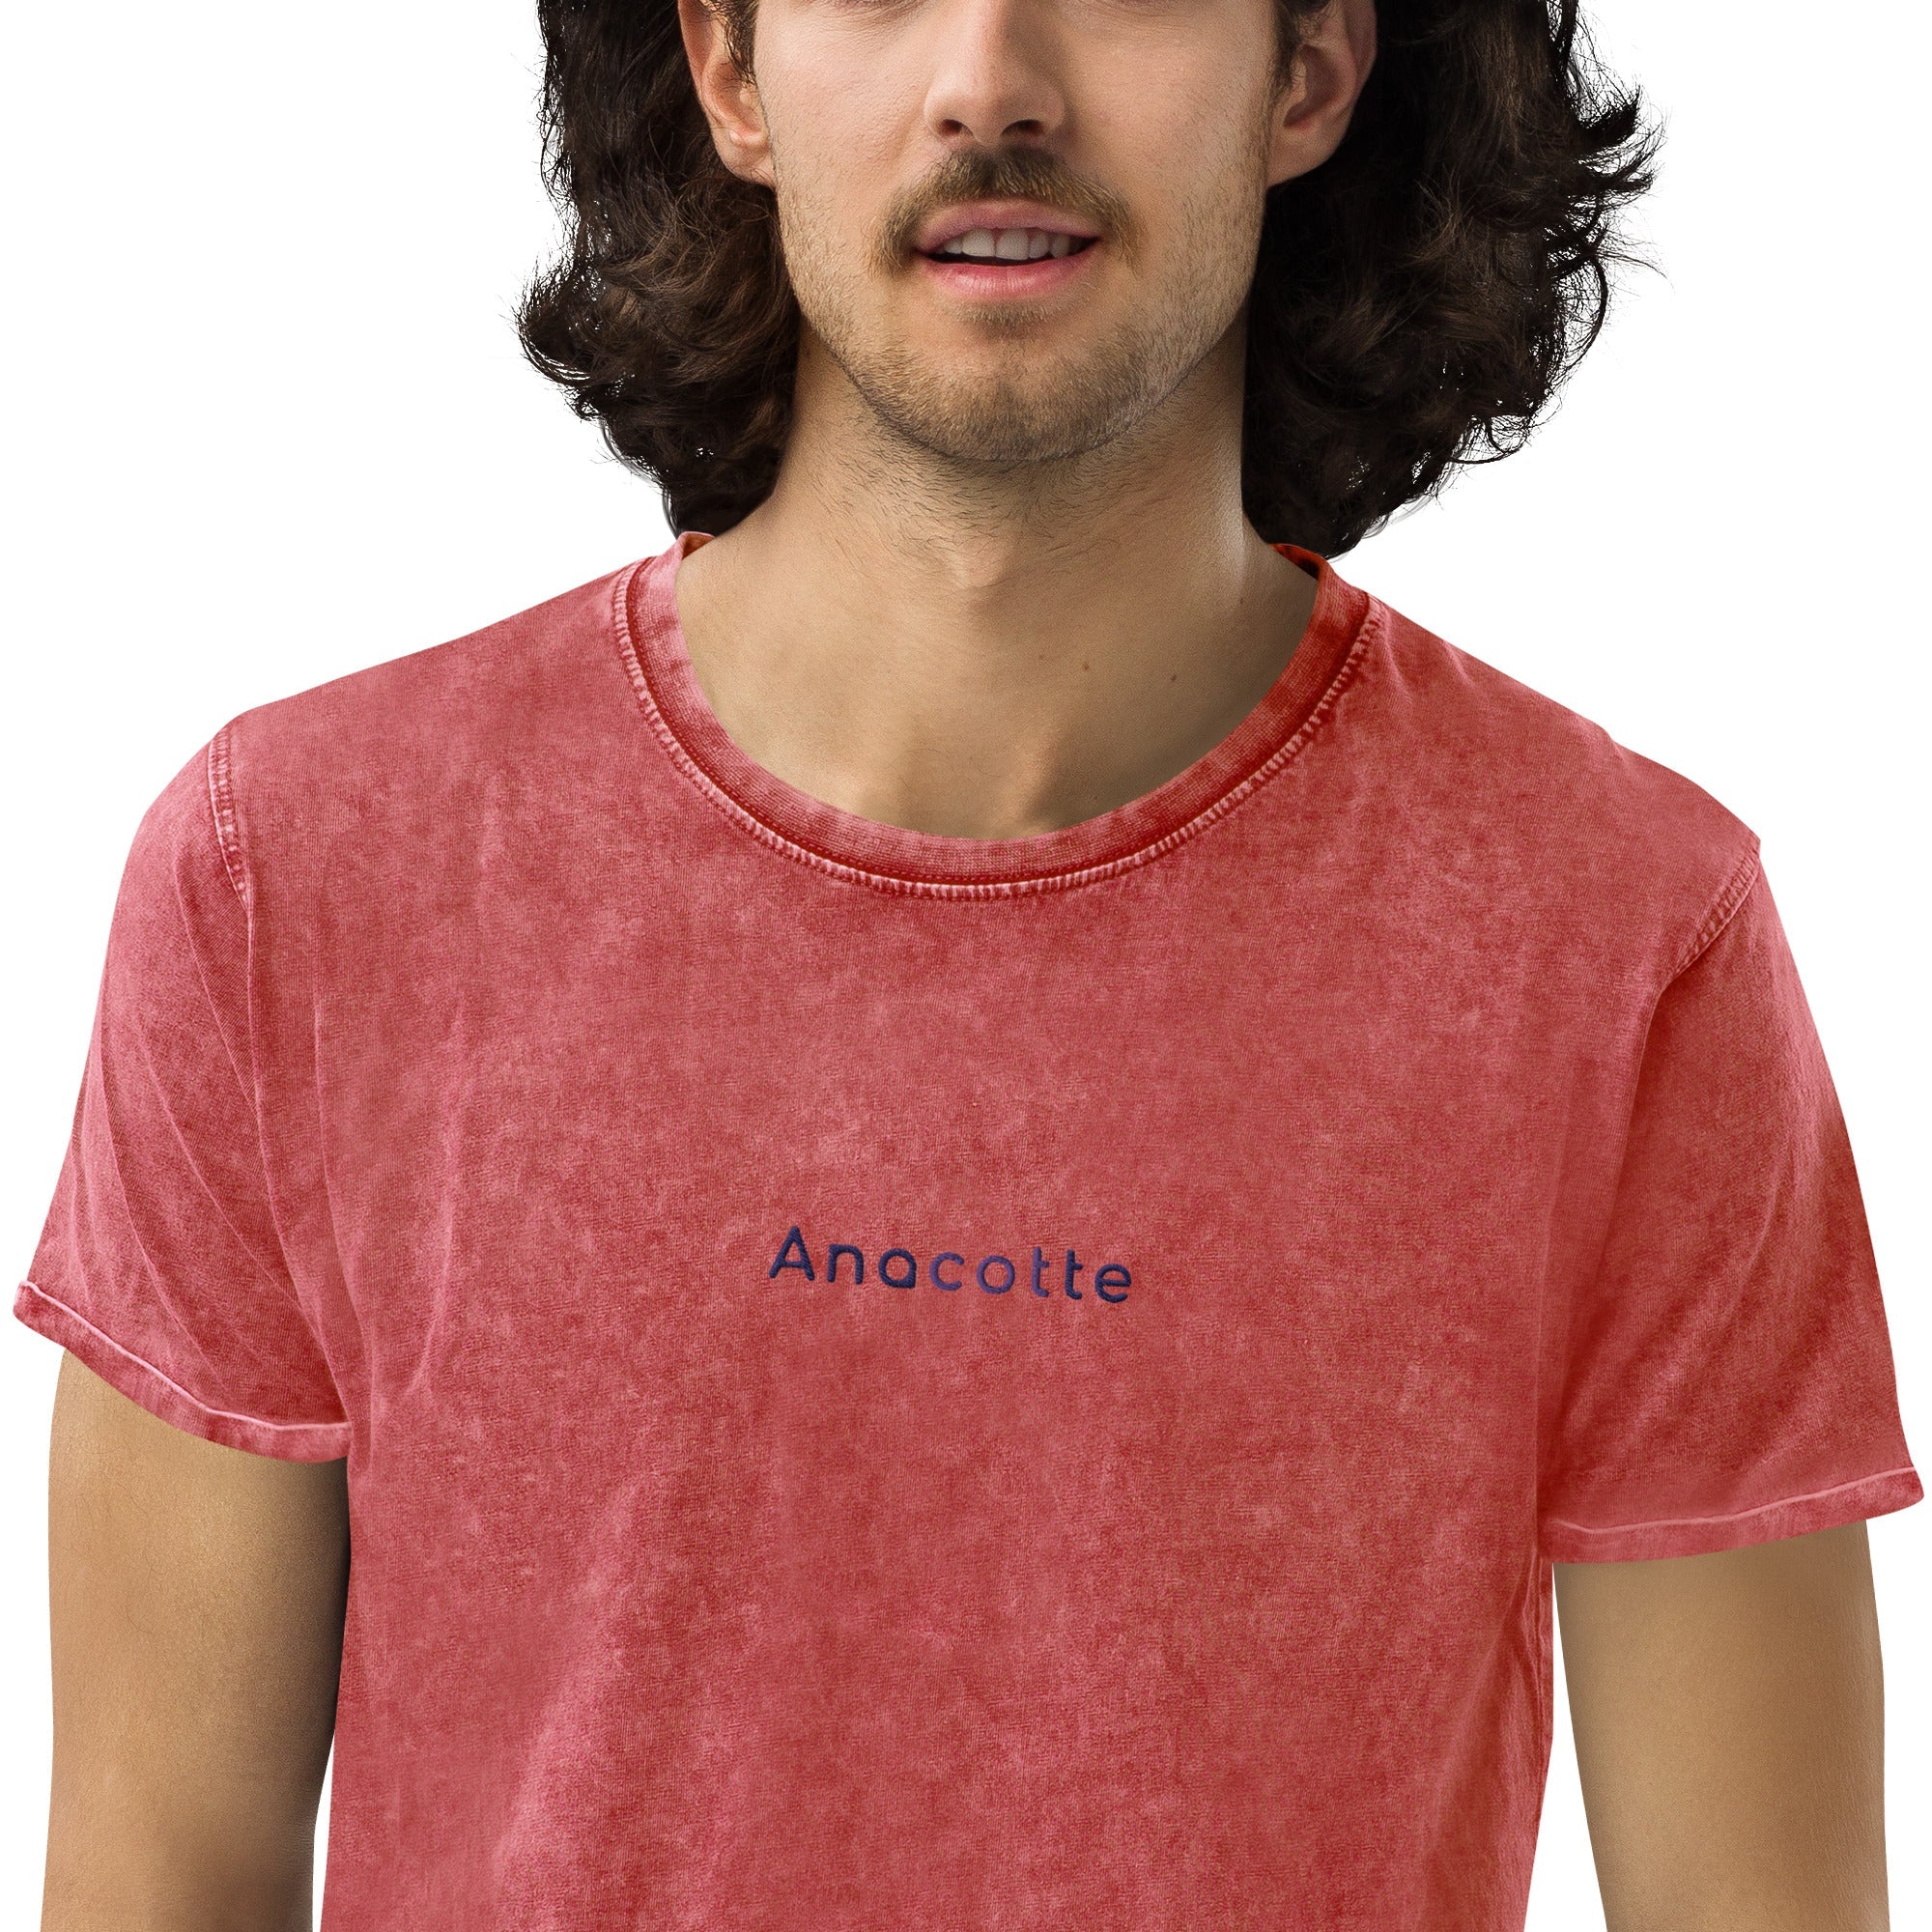 Anacotte Unisex Denim T-Shirt Anacotte